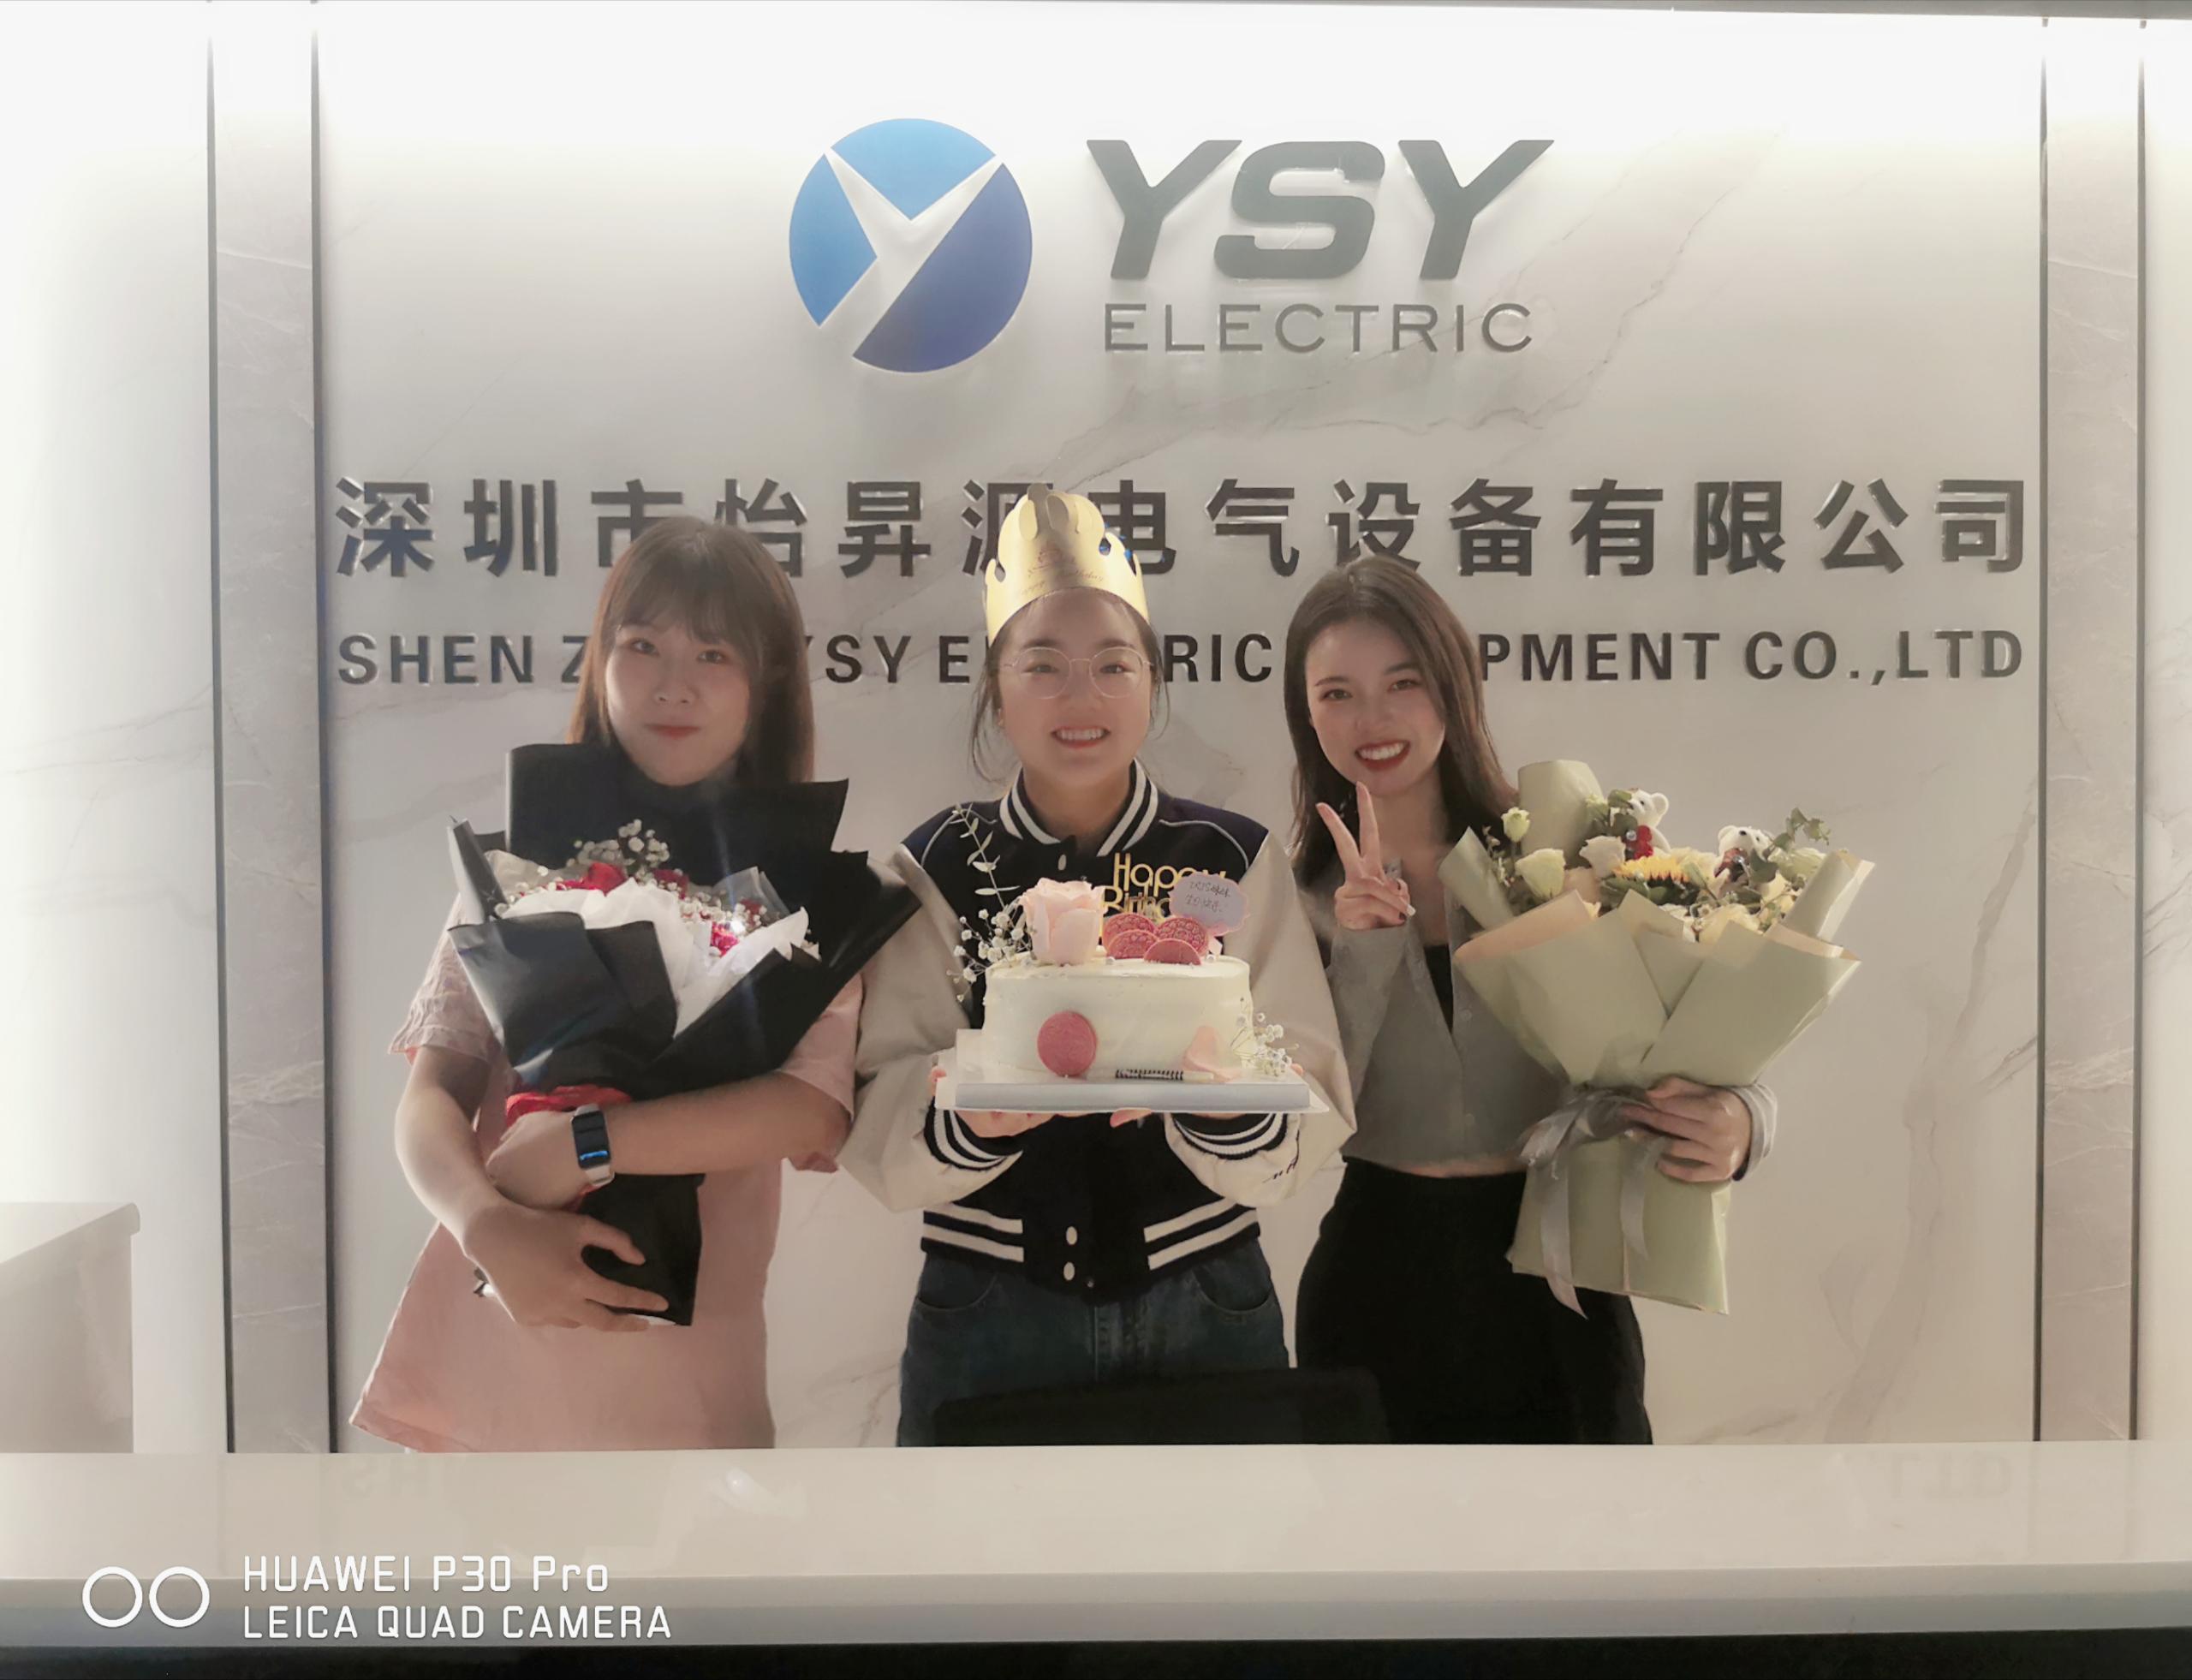 YSY ઇલેક્ટ્રિકના 2 વેચાણને જન્મદિવસની શુભેચ્છાઓ!